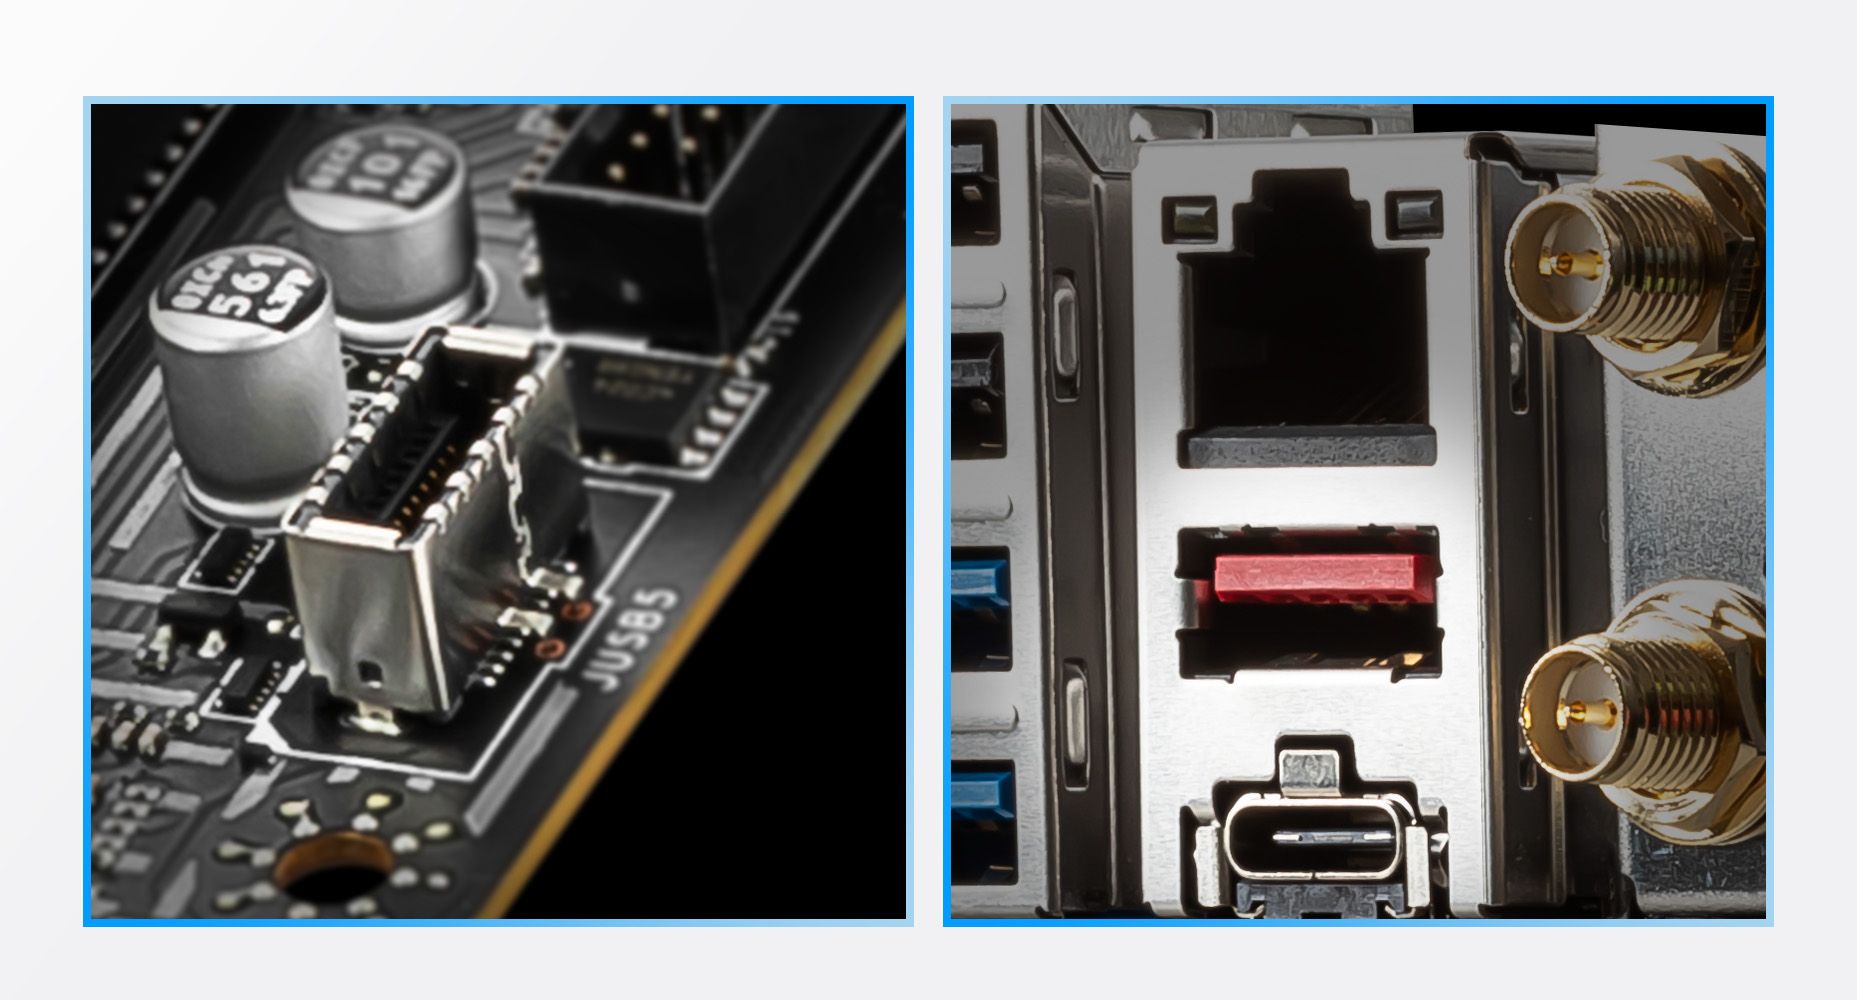 MSI Z590 PRO WIFI USB Type-C ready in both Front case panel & Rear IO